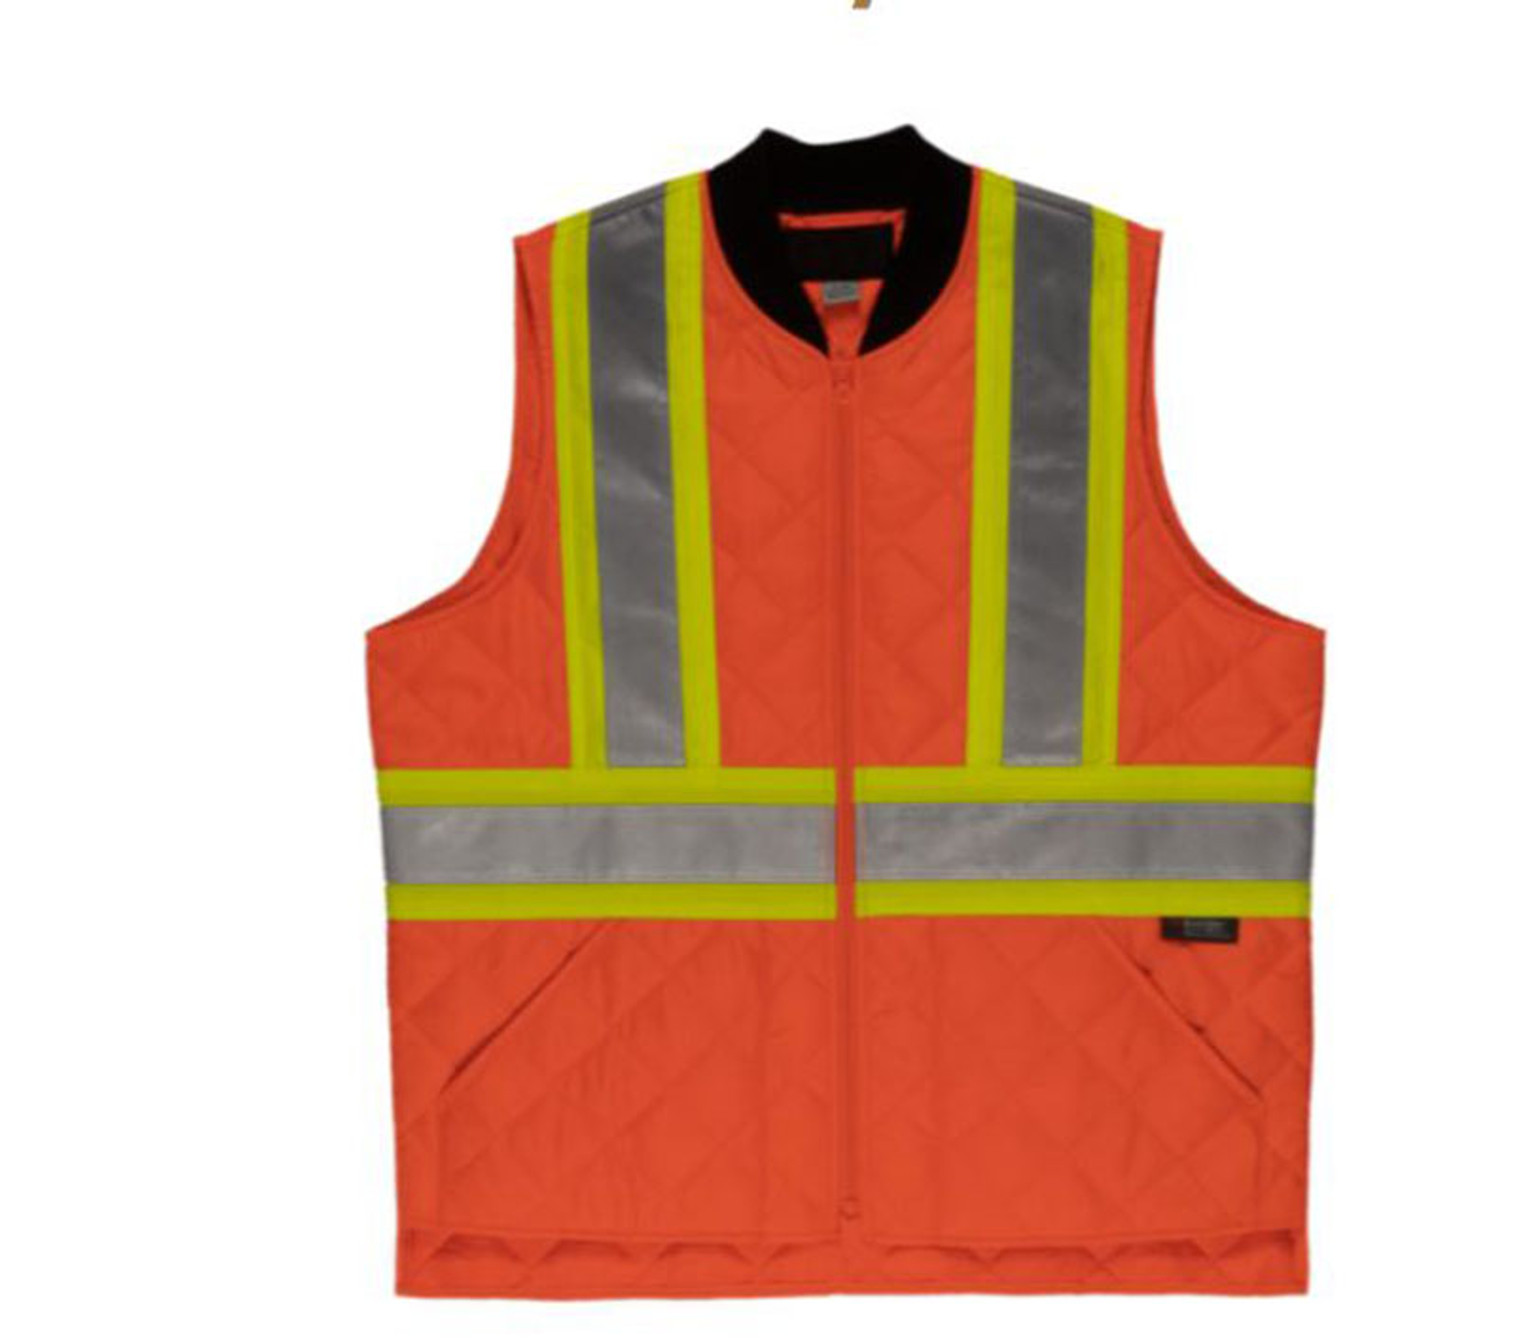 Quilted Safety Vest (Fluorescent Orange) - 2 Pack